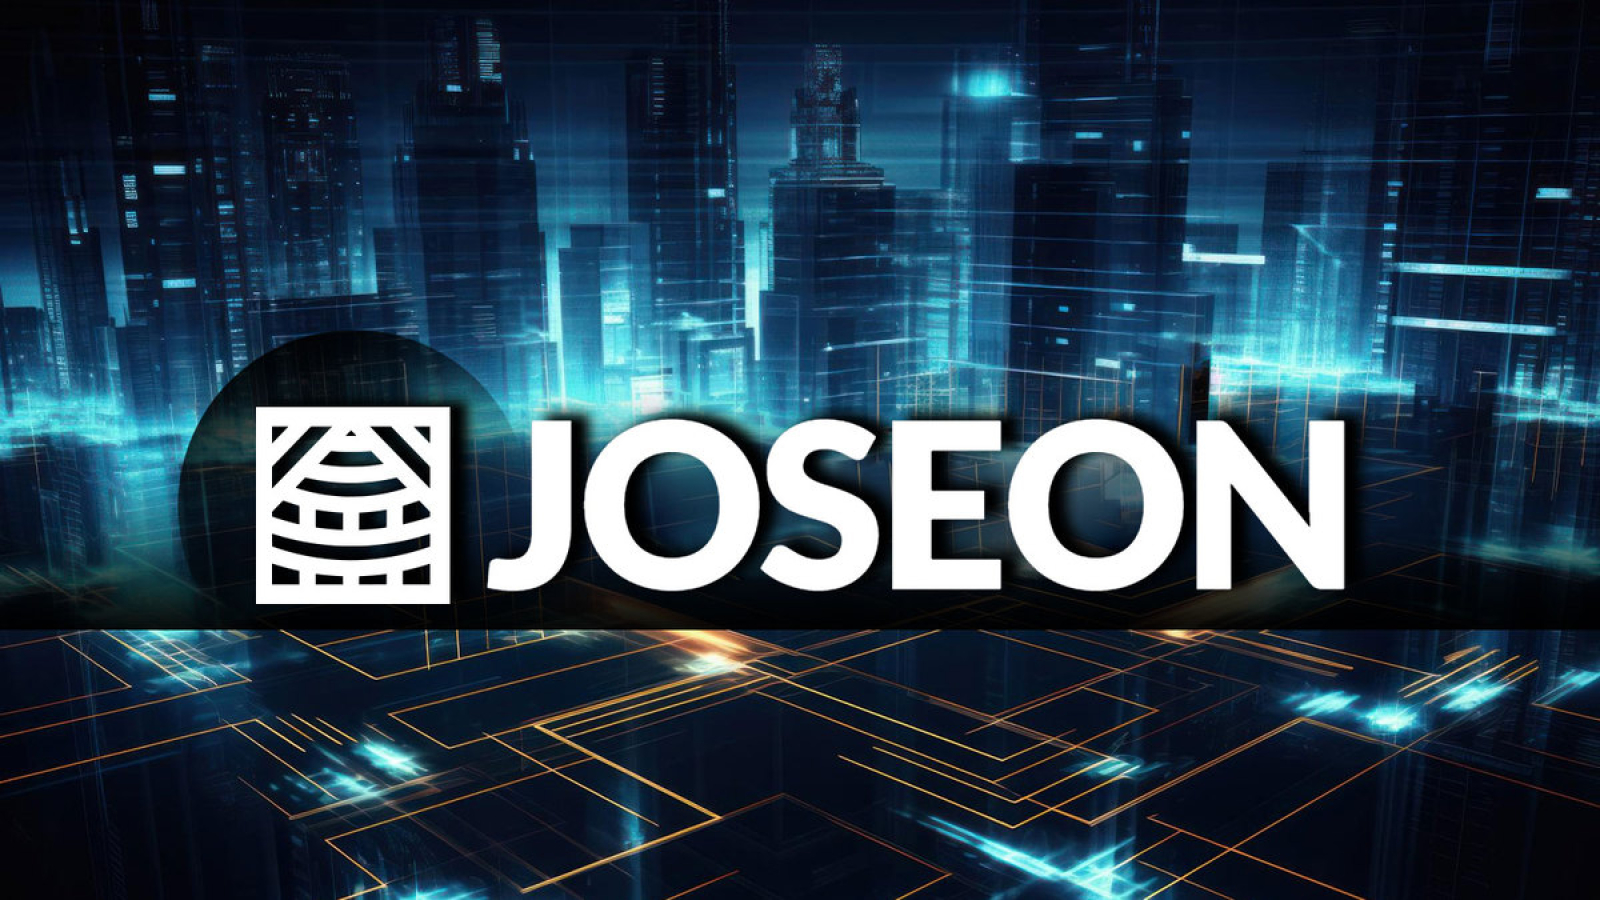 Joseon Reinvents Digital Nation-State on Blockchain